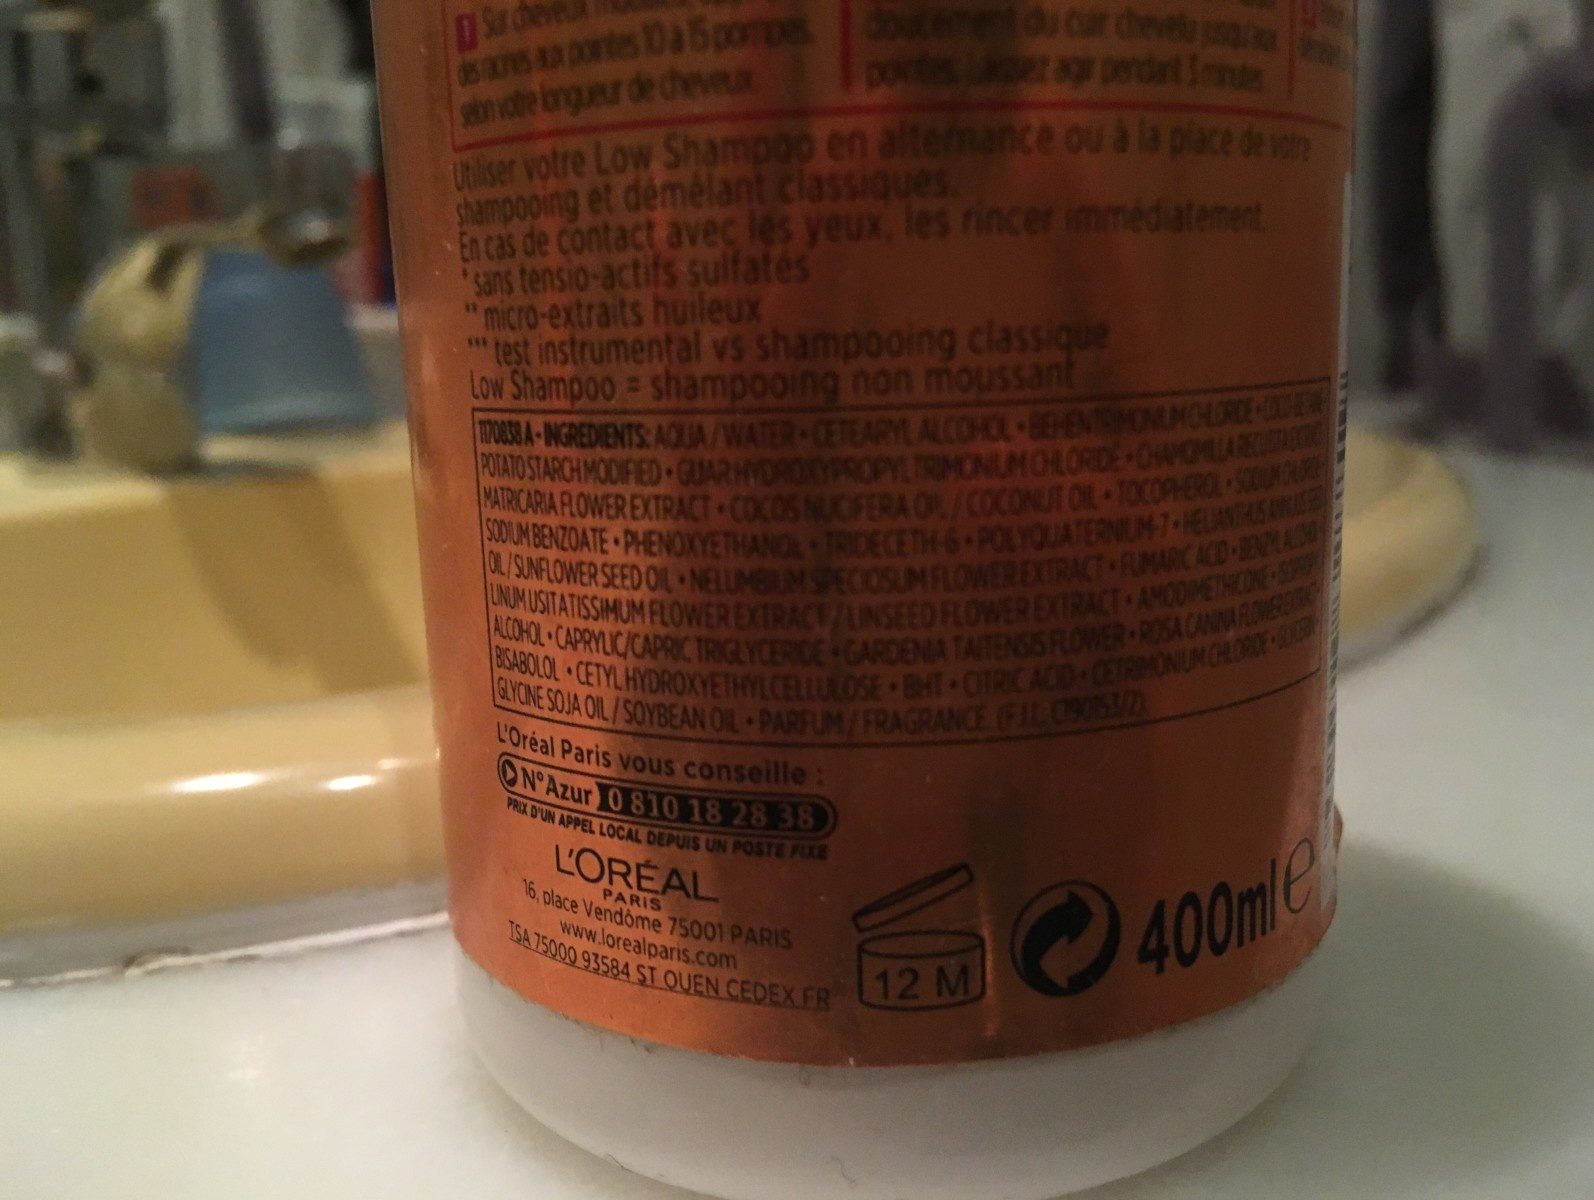 Low shampoo huile extraordinaire - Inhaltsstoffe - fr